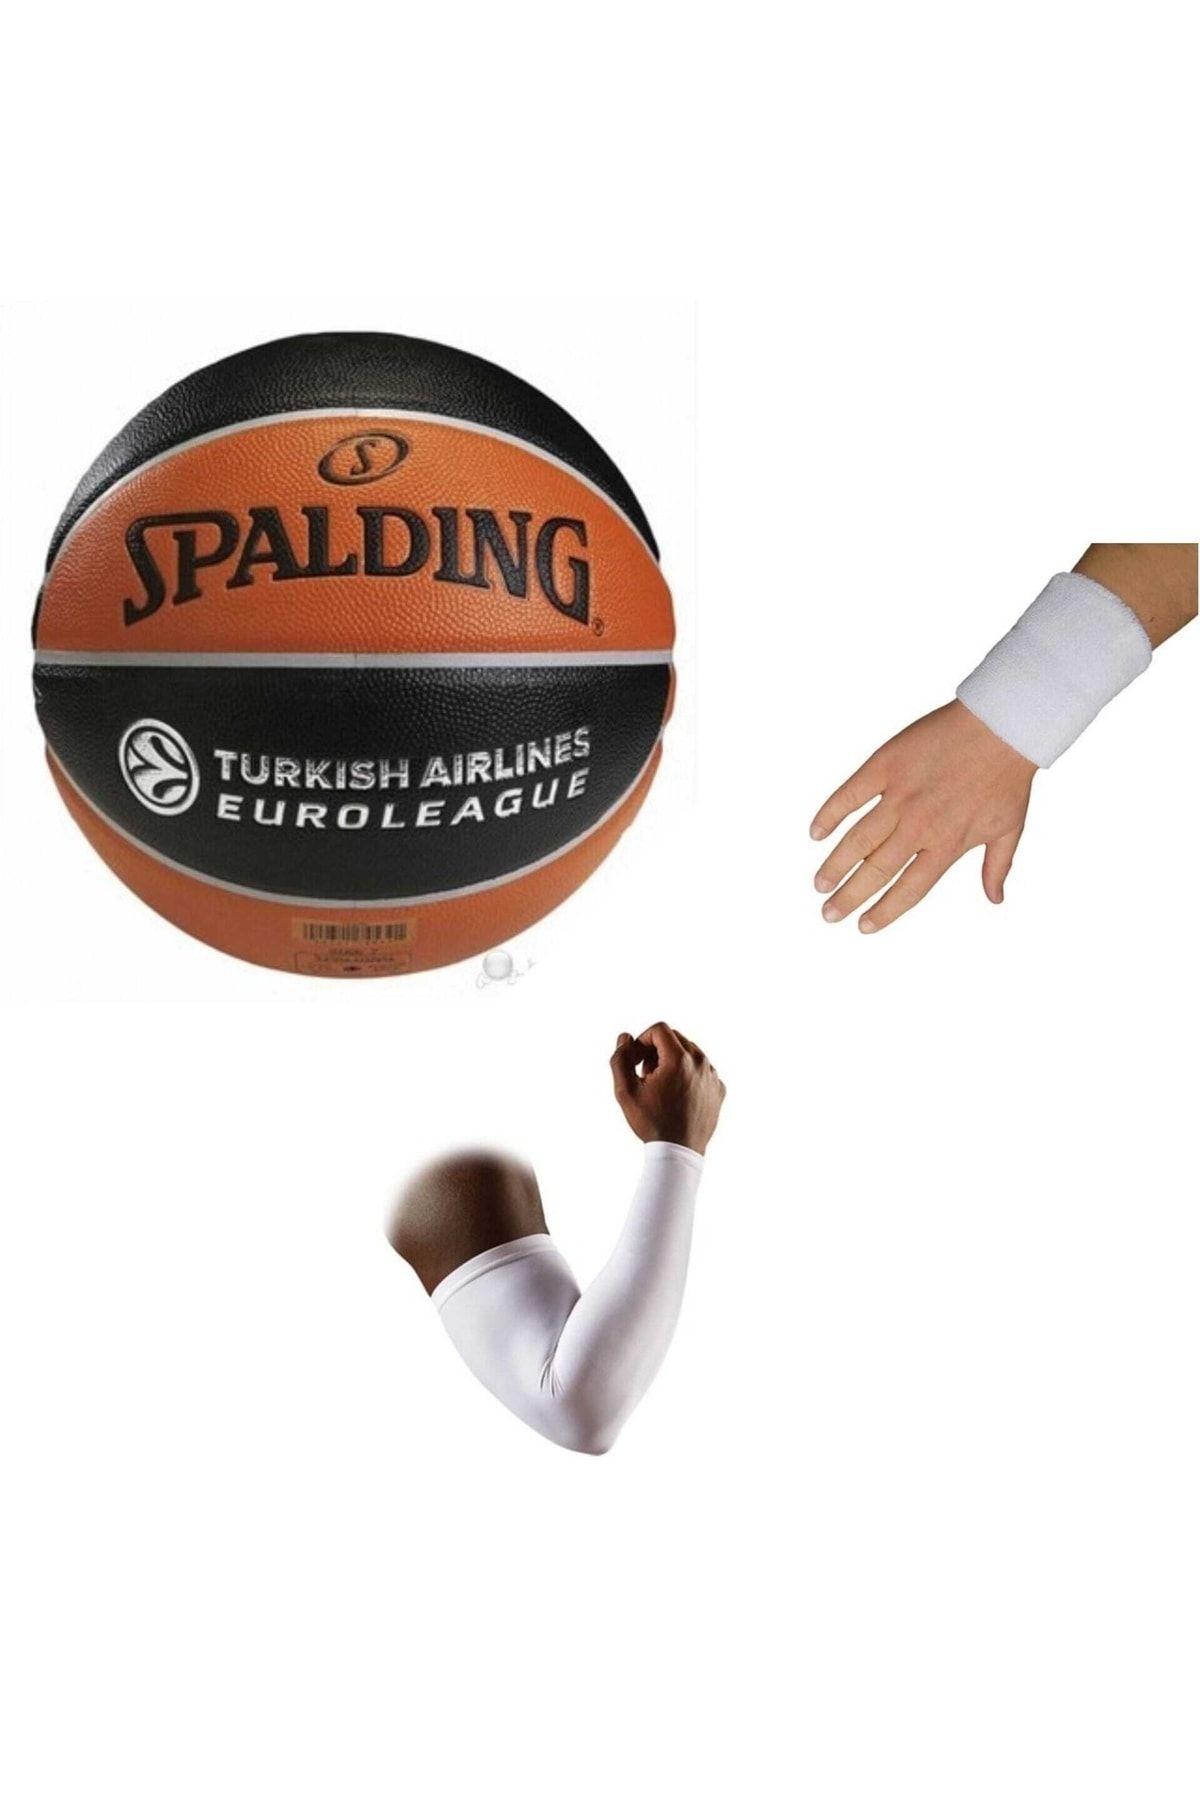 Spalding Basketbol Topu Tf150 7 Euroleague Tf150 6 Numara +basketbol Kolluğu+havlu Bıleklık